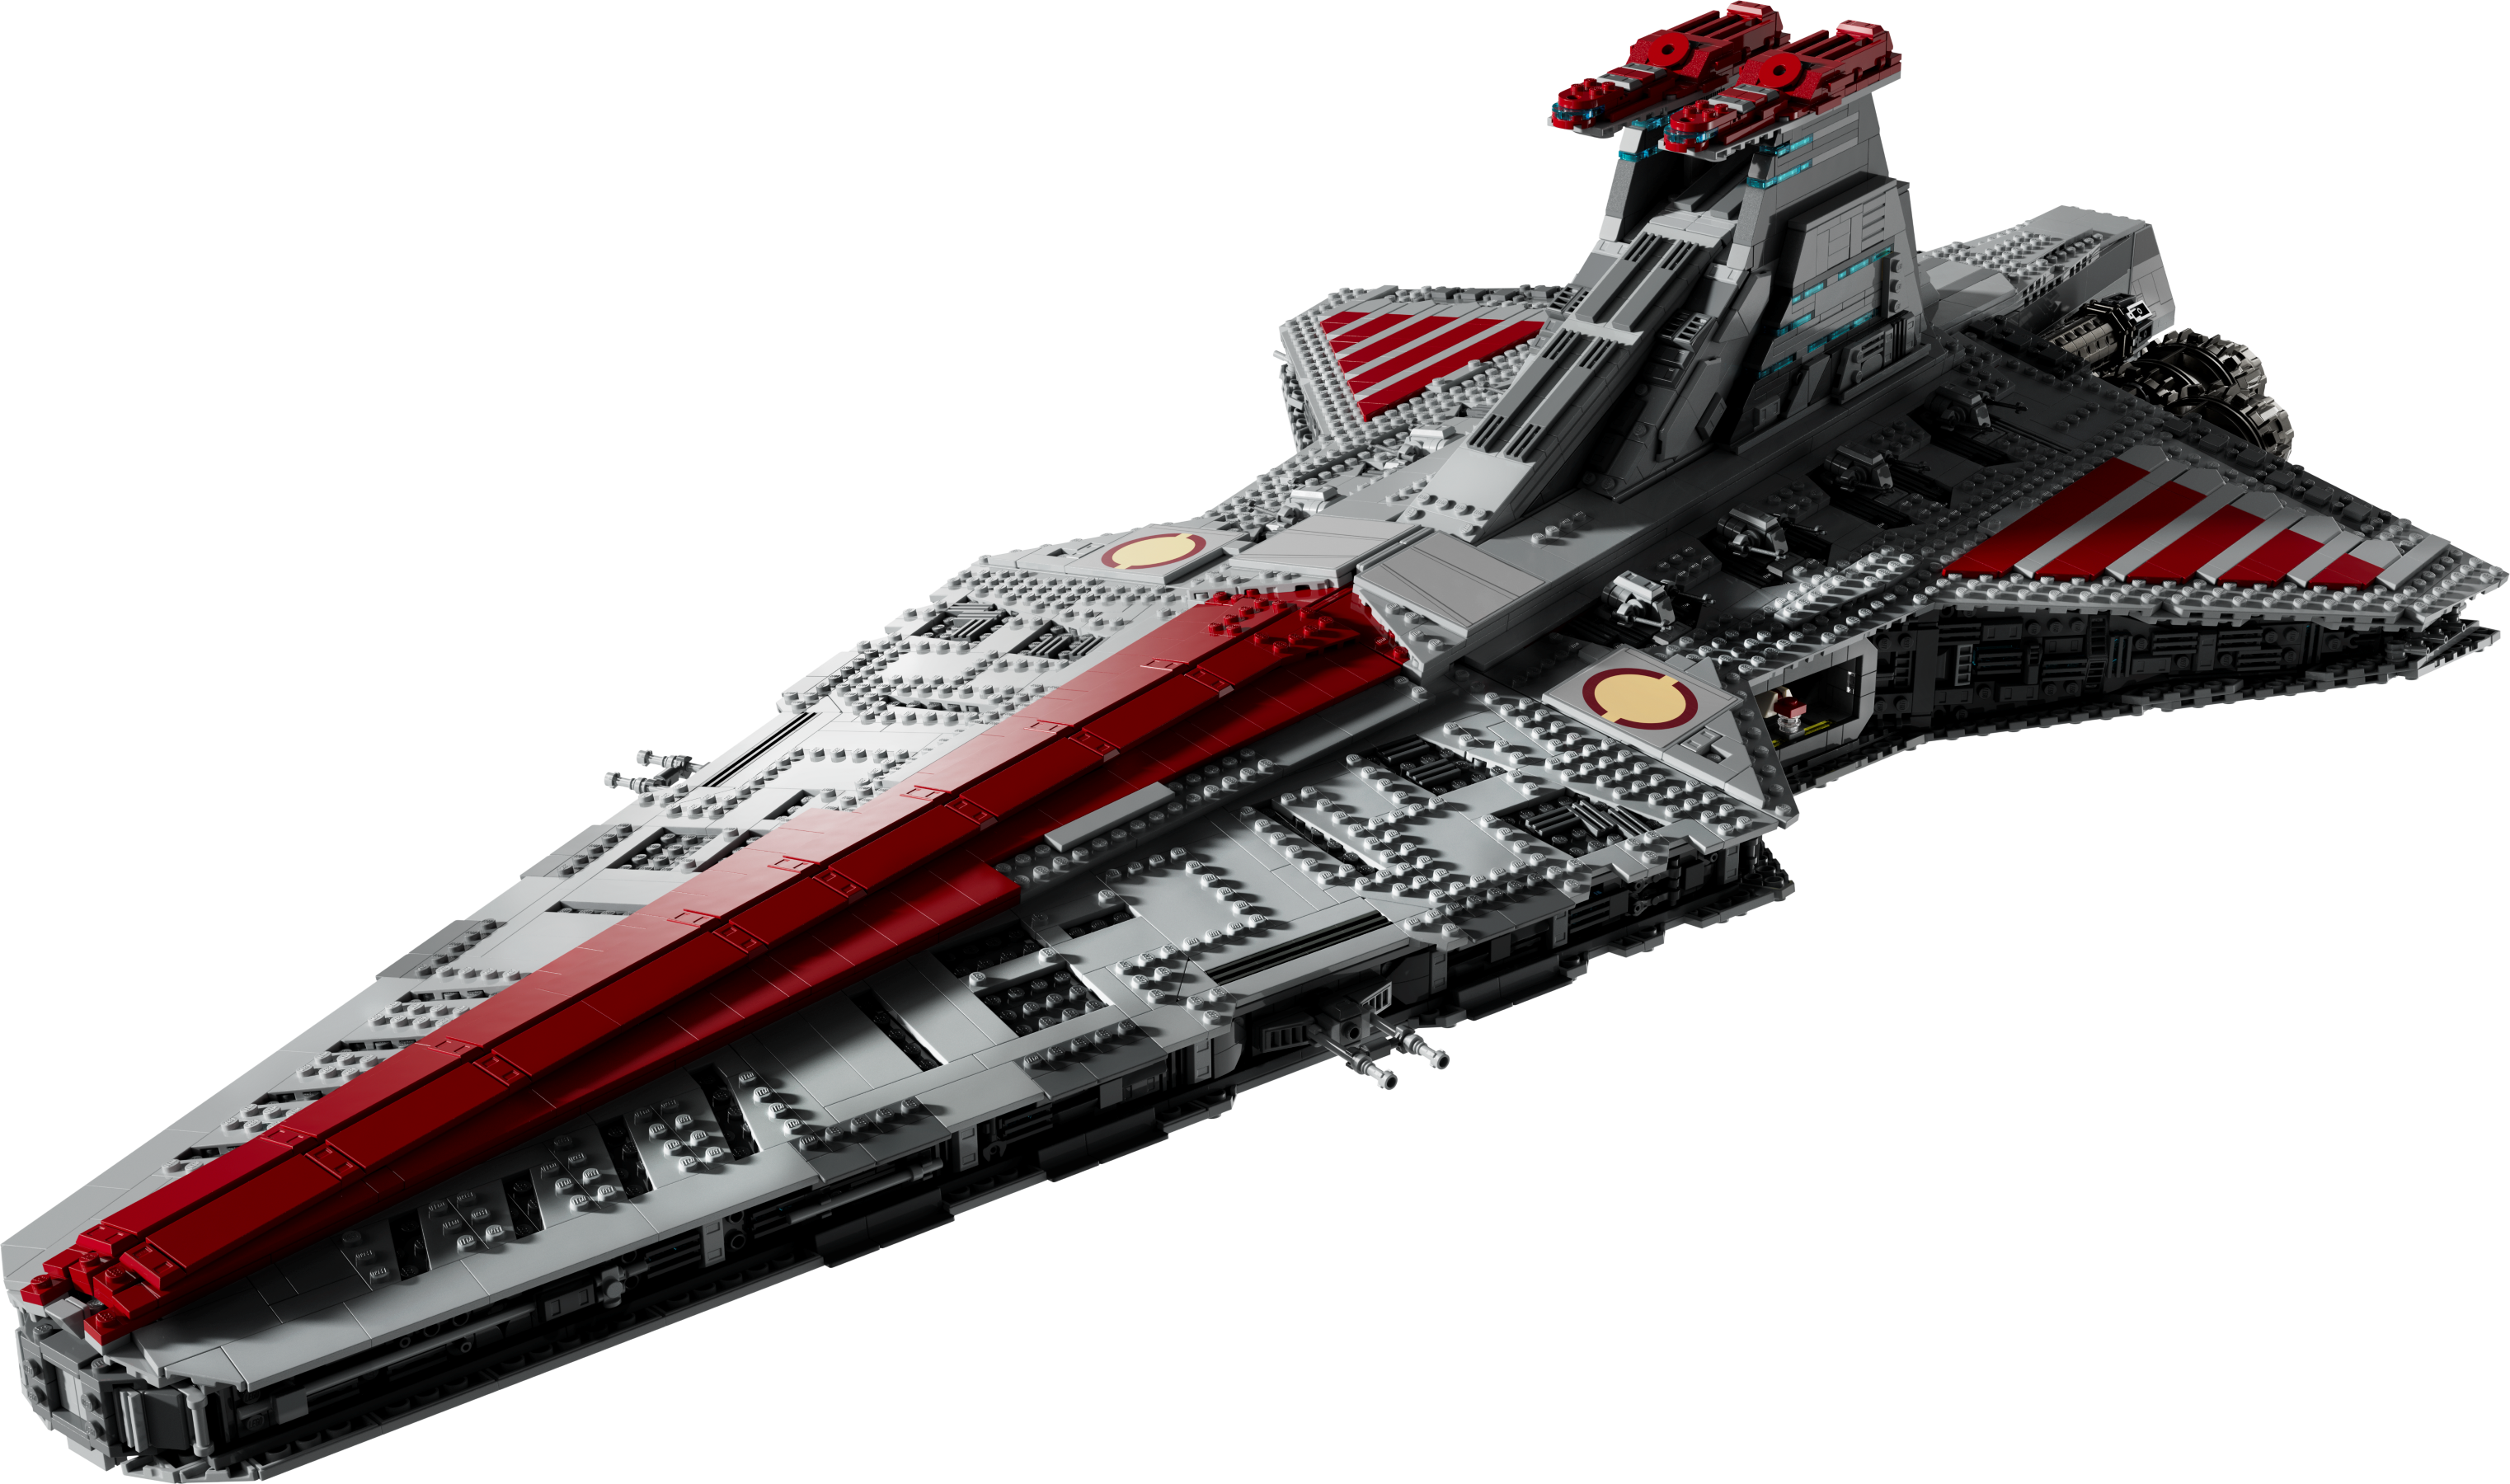 Venator-Class Republic Attack Cruiser 75367, Star Wars™